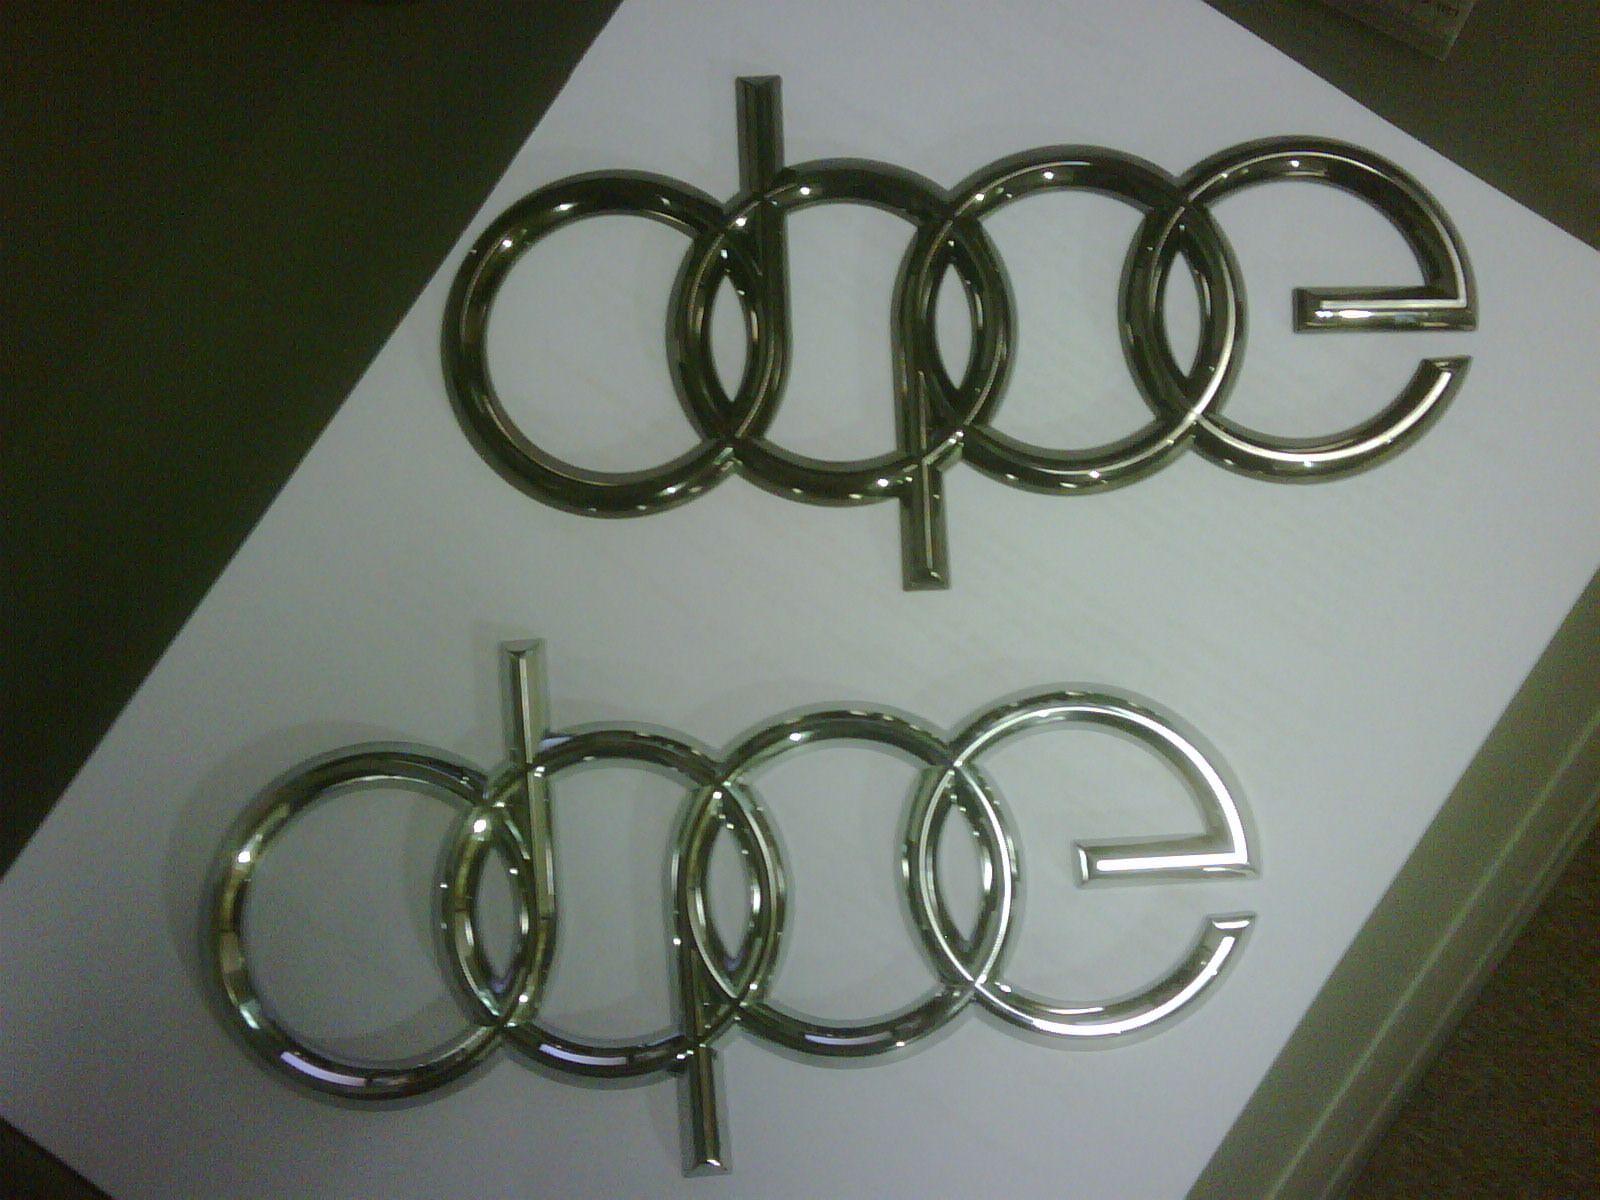 Audi Dope Logo - EBAY Find - Audi Dope Emblem's